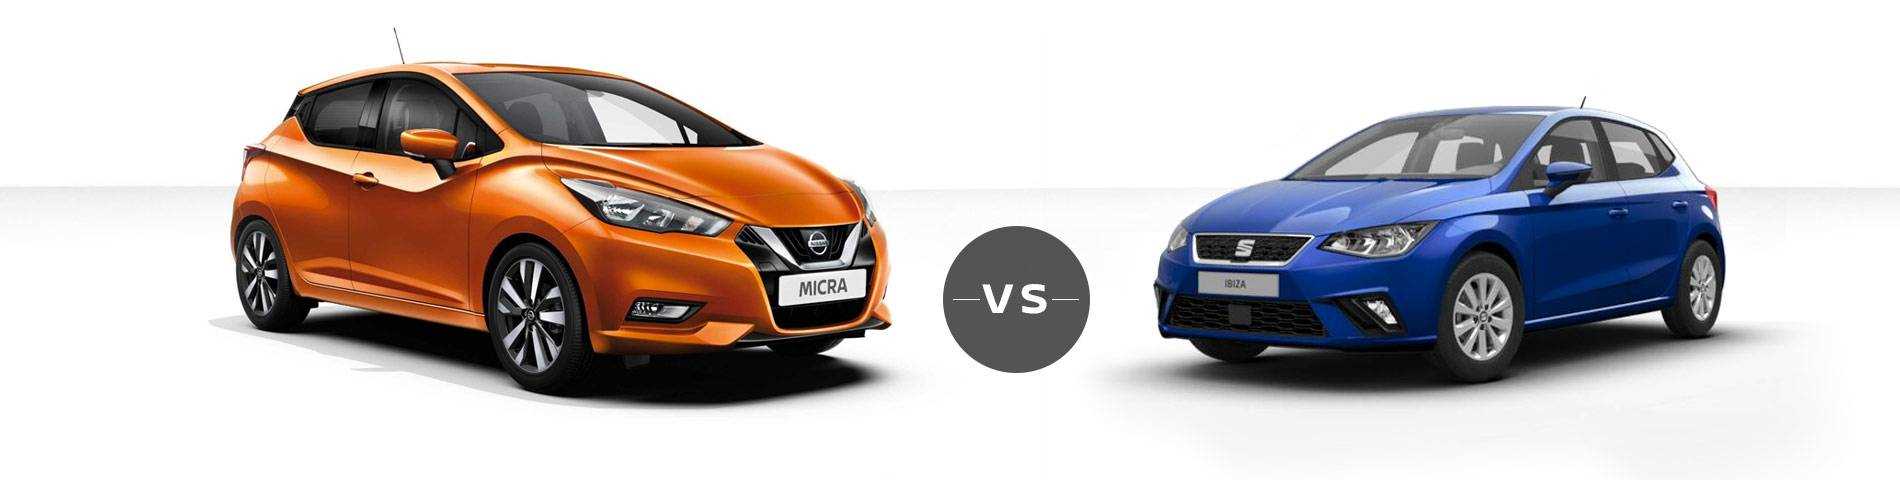 Nissan Micra vs Seat Ibiza